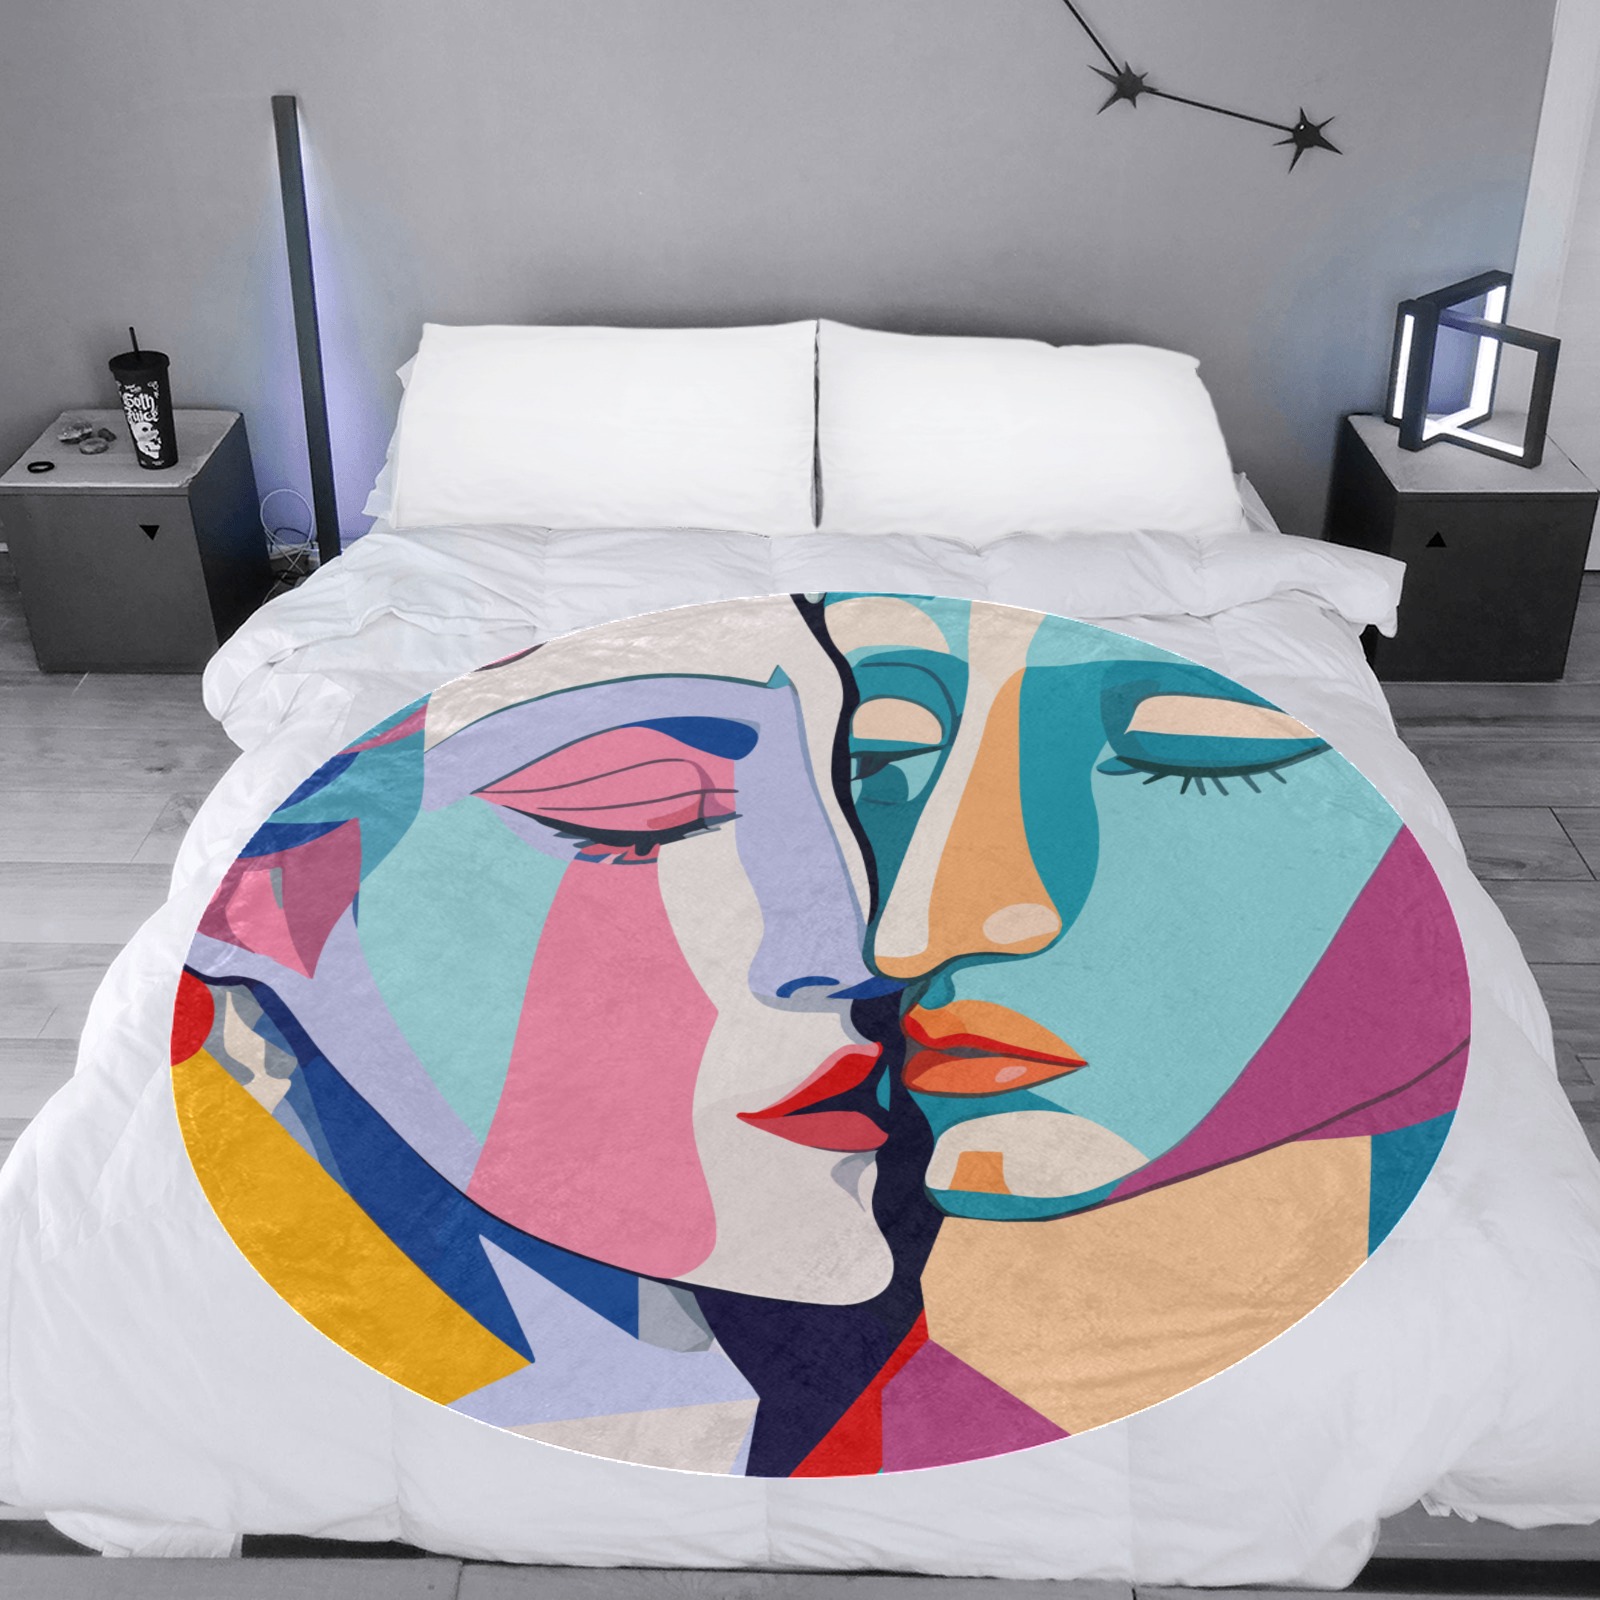 Love. Kissing man, woman art. Pastel colors. Circular Ultra-Soft Micro Fleece Blanket 60"